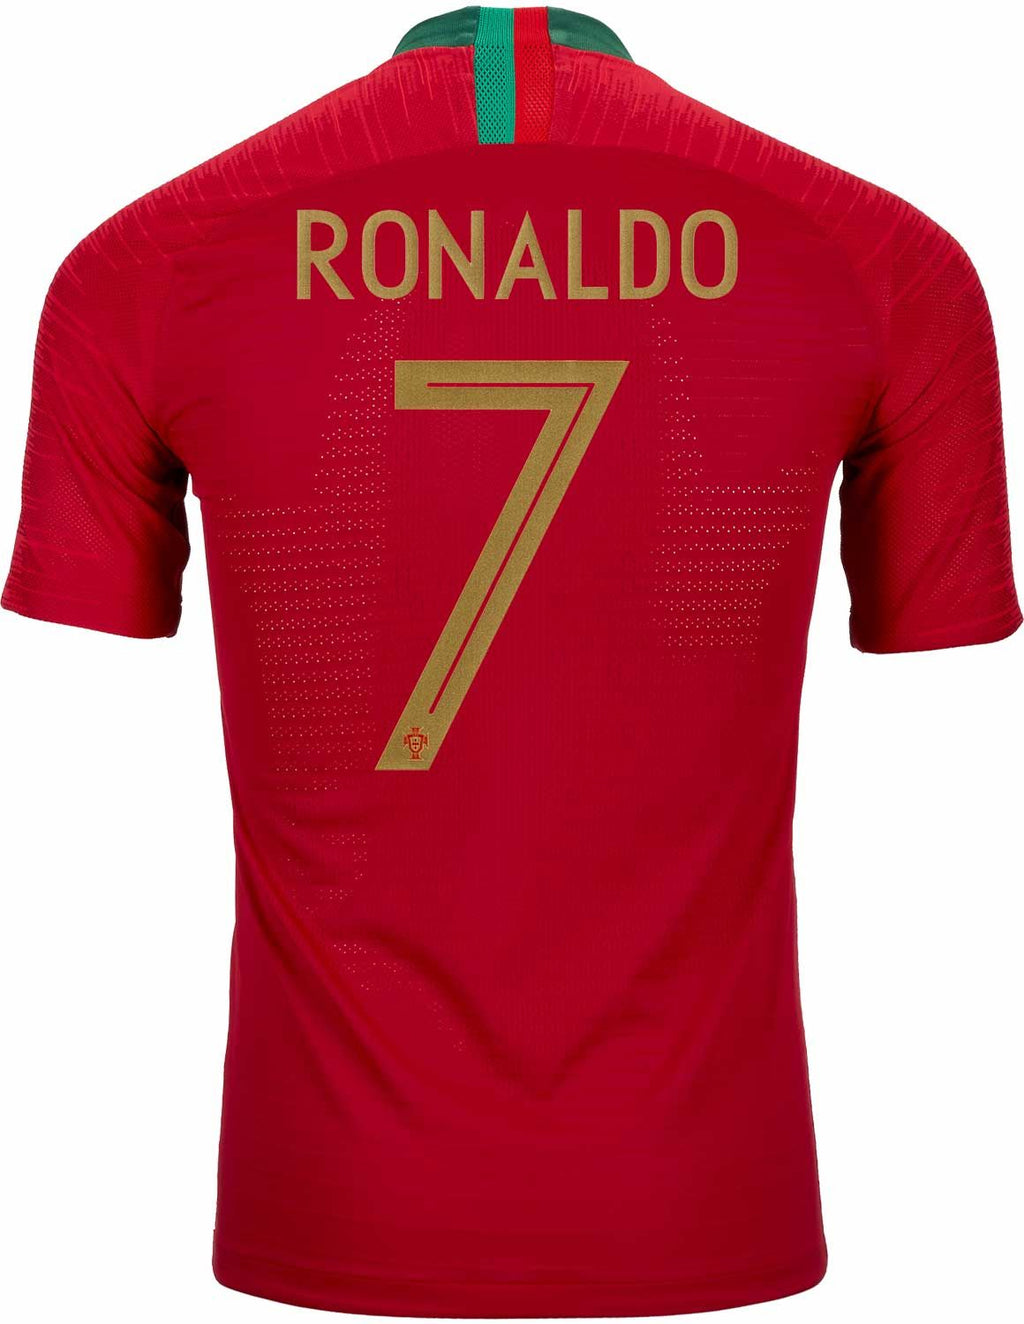 ronaldo in portugal jersey